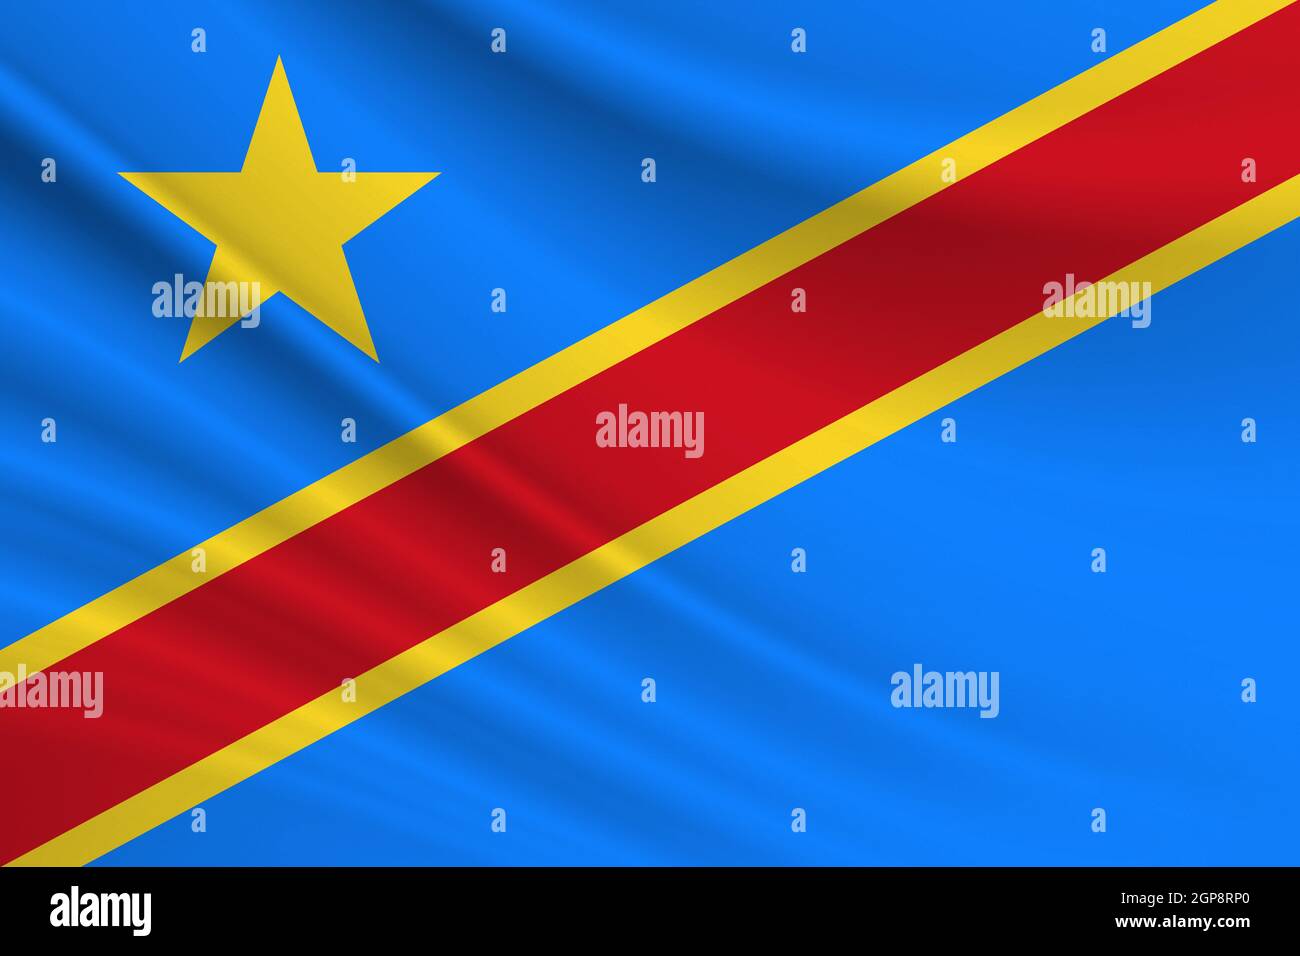 Flag of Democratic Republic of the Congo Fabric texture of the flag of Democratic Republic of the Congo. Stock Photo